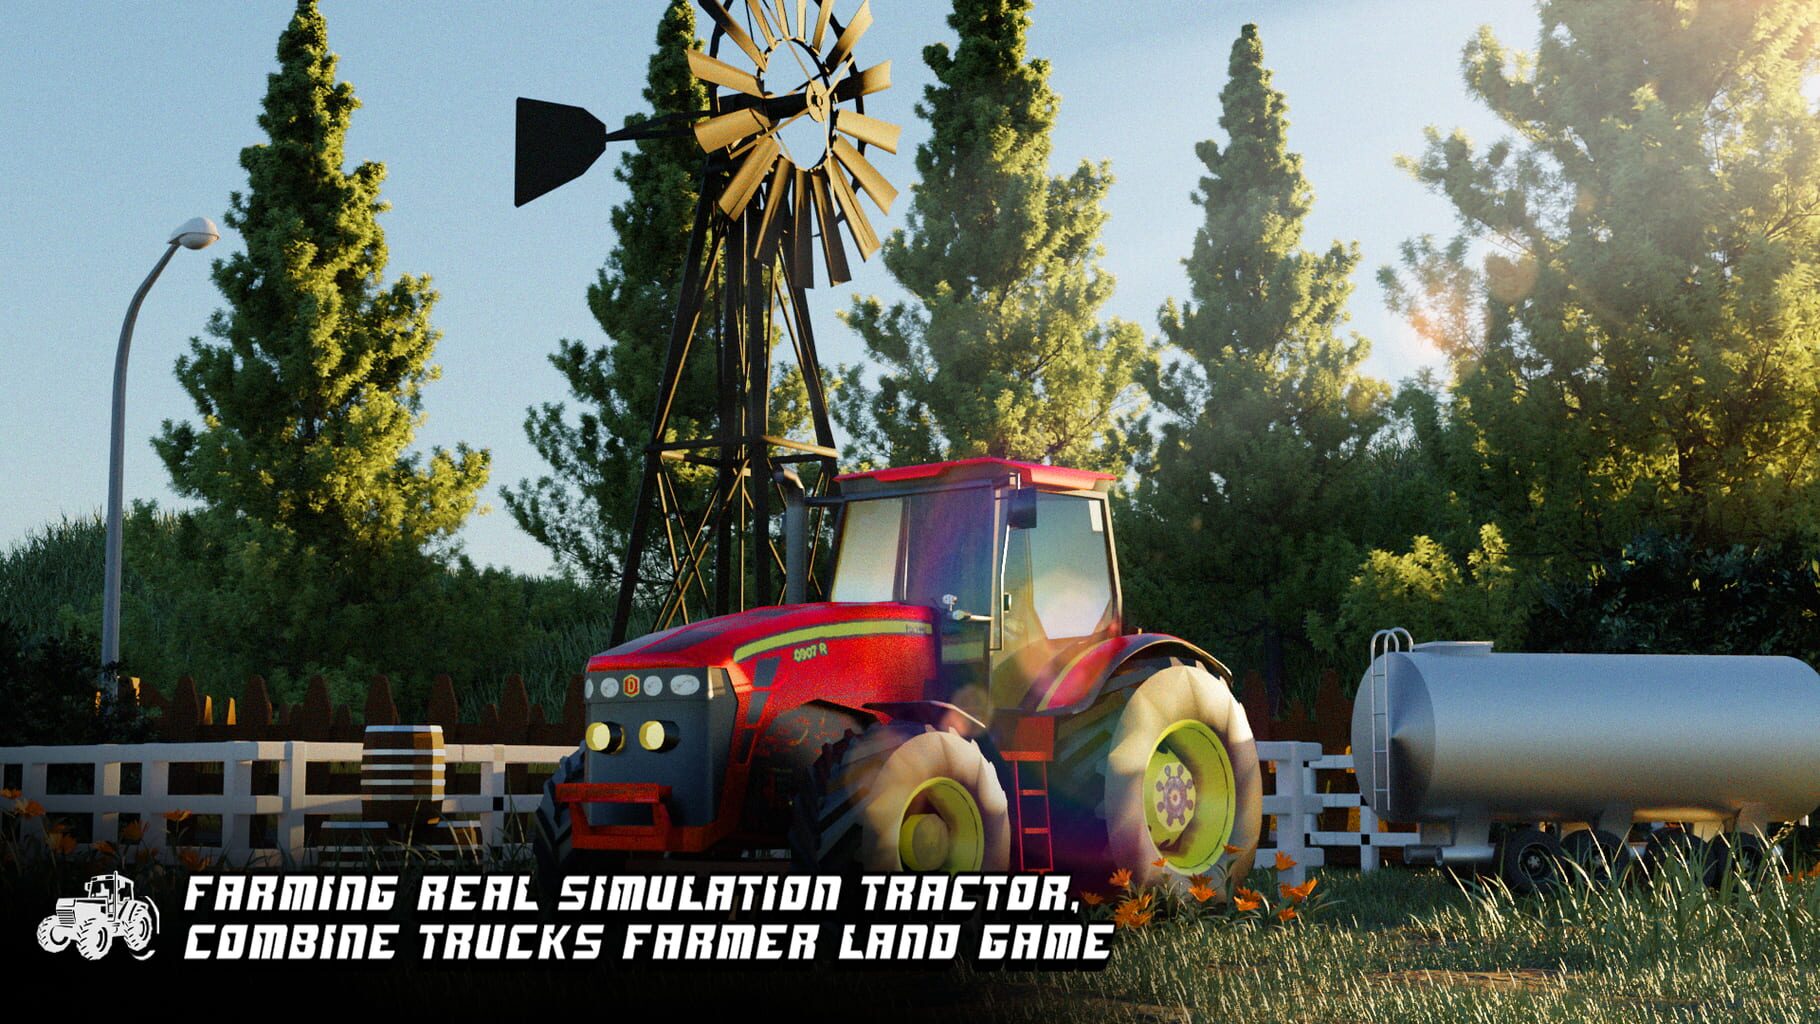 Farming Real Simulation Tractor, Combine Trucks Farmer Land Game artwork